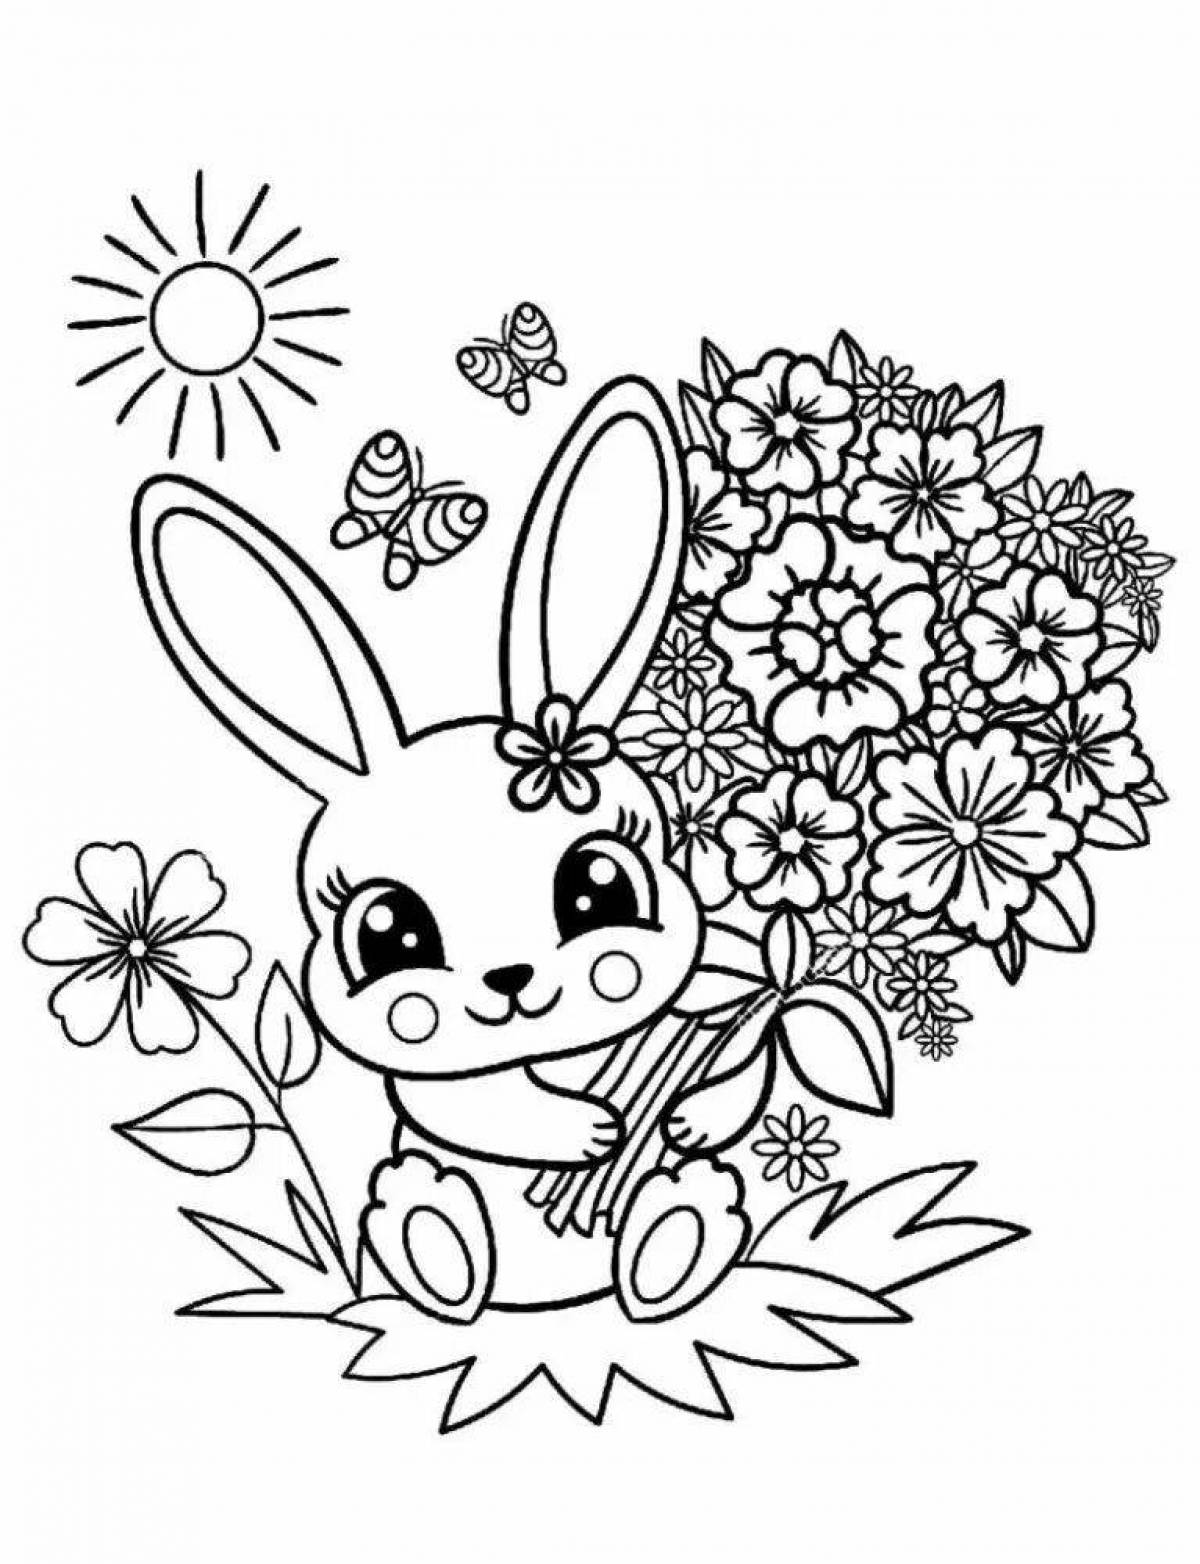 Fun coloring rabbit